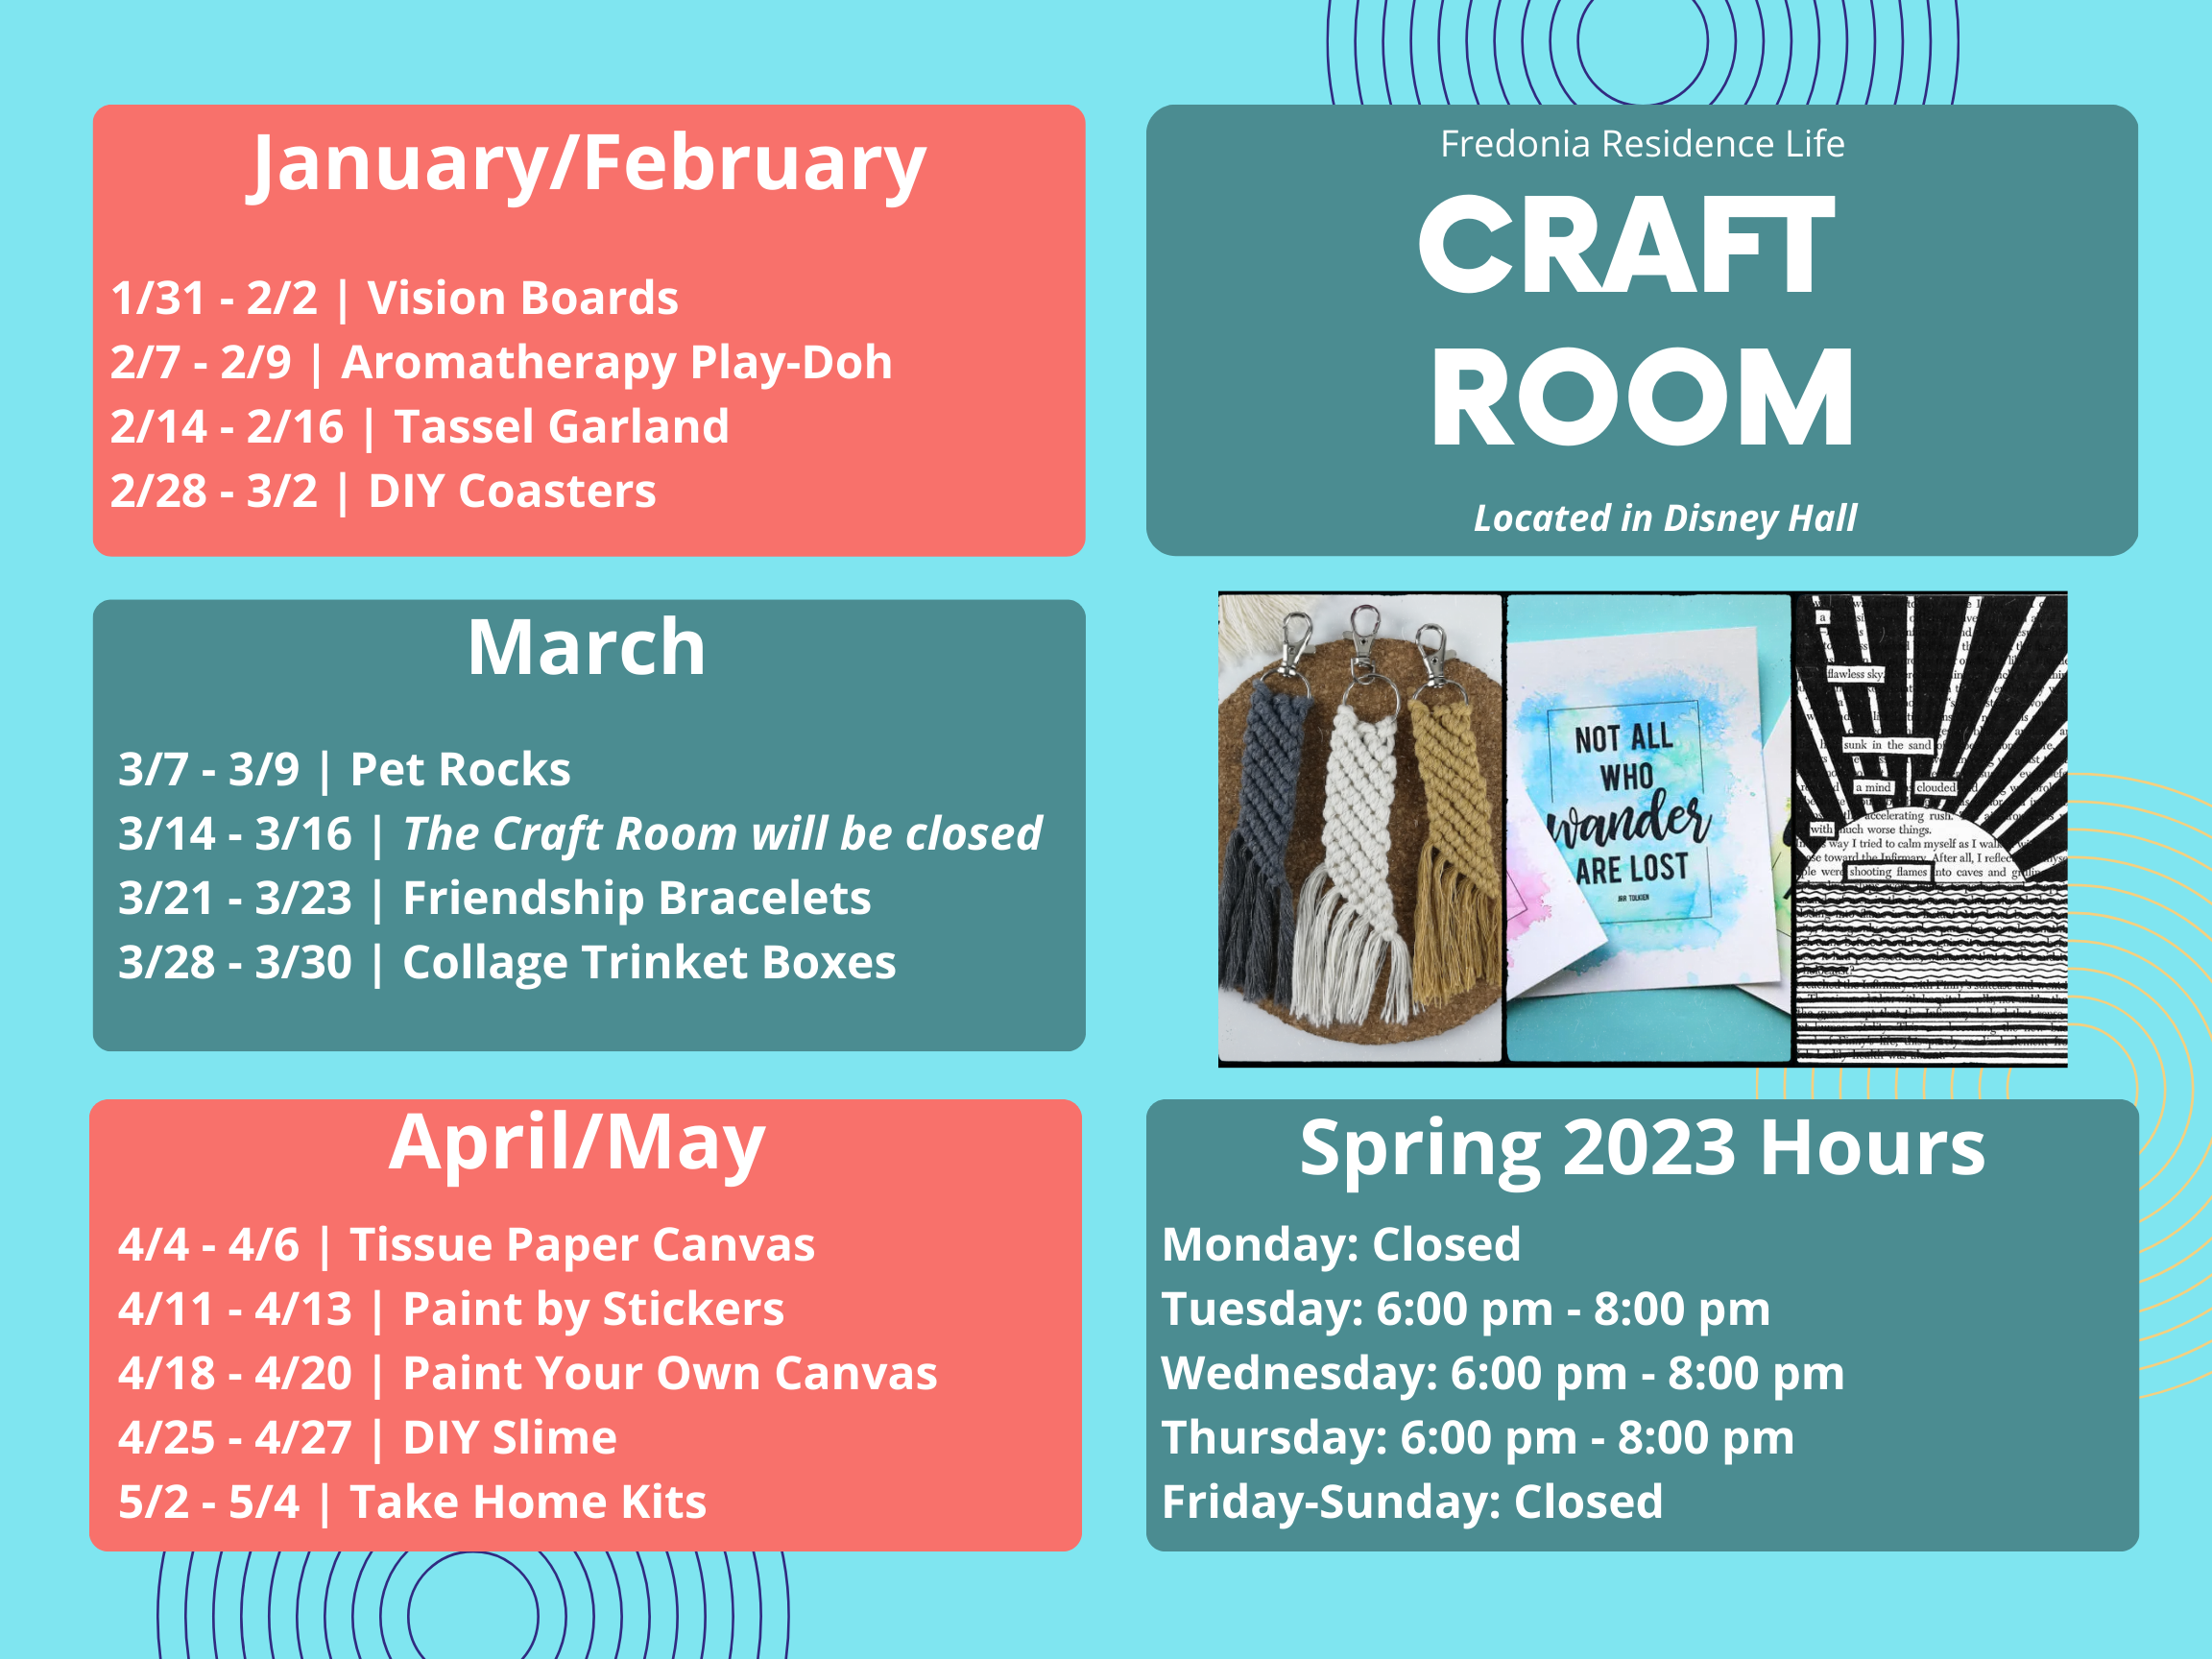 Spring 2023 Craft Room